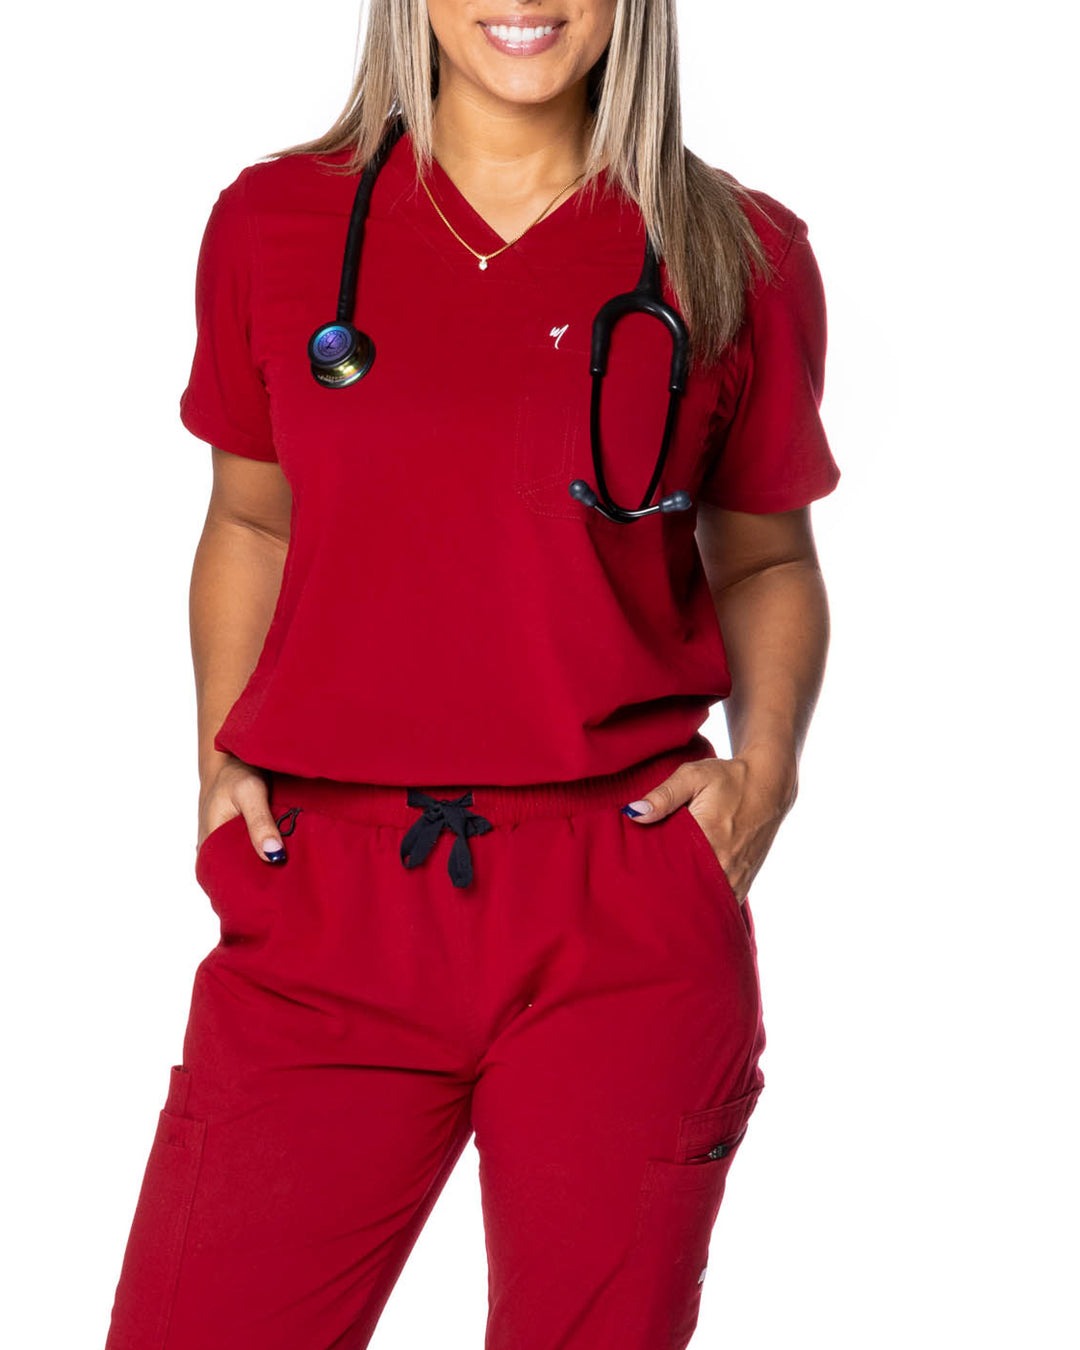 women's Burgundy Scrub Top - Jogger Scrubs by Millennials In Medicine (Mim Scrubs)